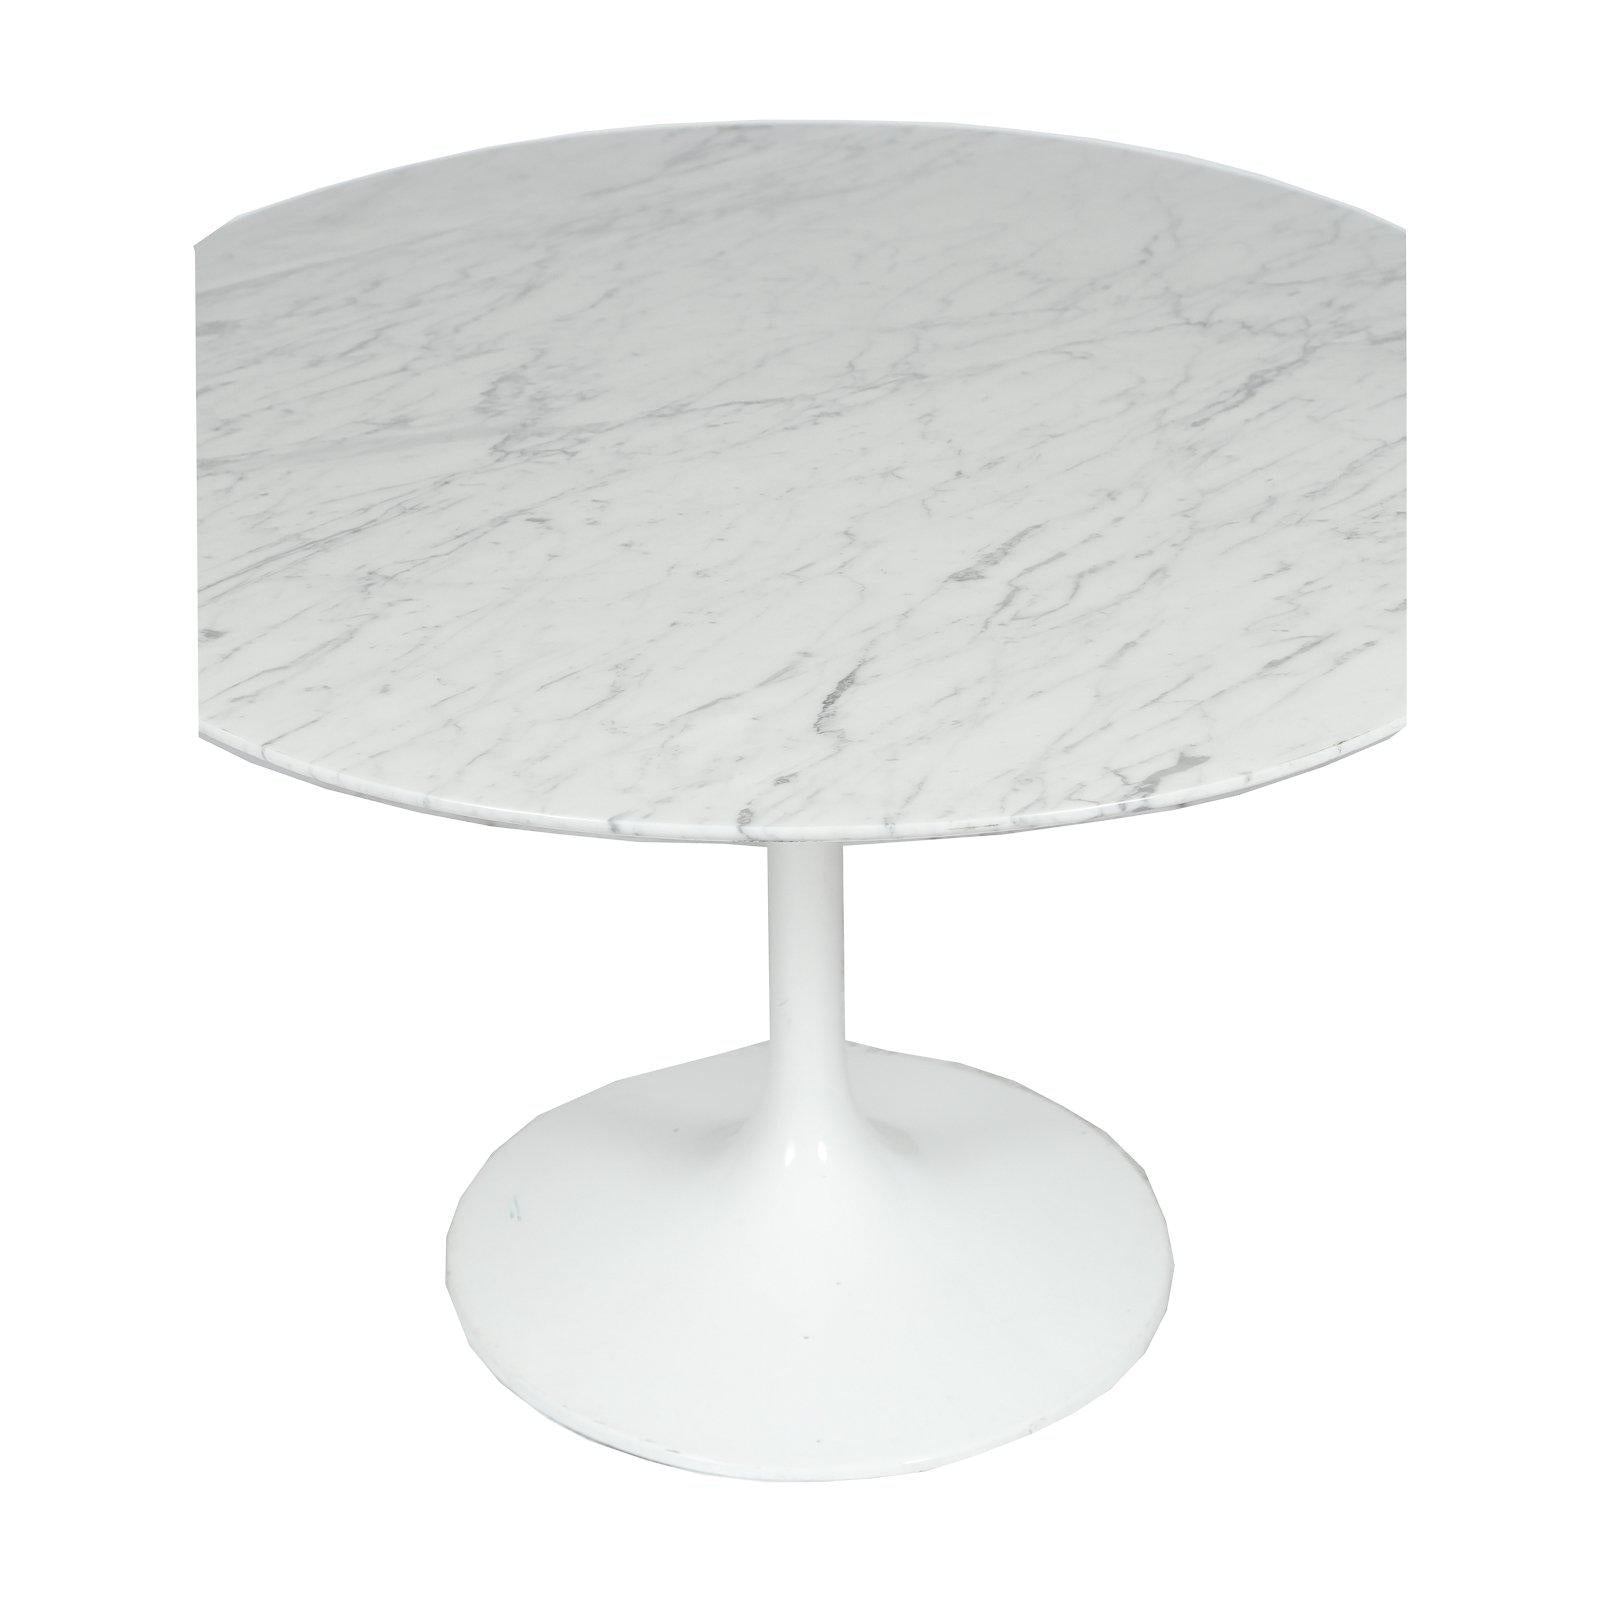 Table marbre - Inspiration Tulip Chair Saarinen occasion - Blanc - 200 x 100 x 75 cm-Bluedigo